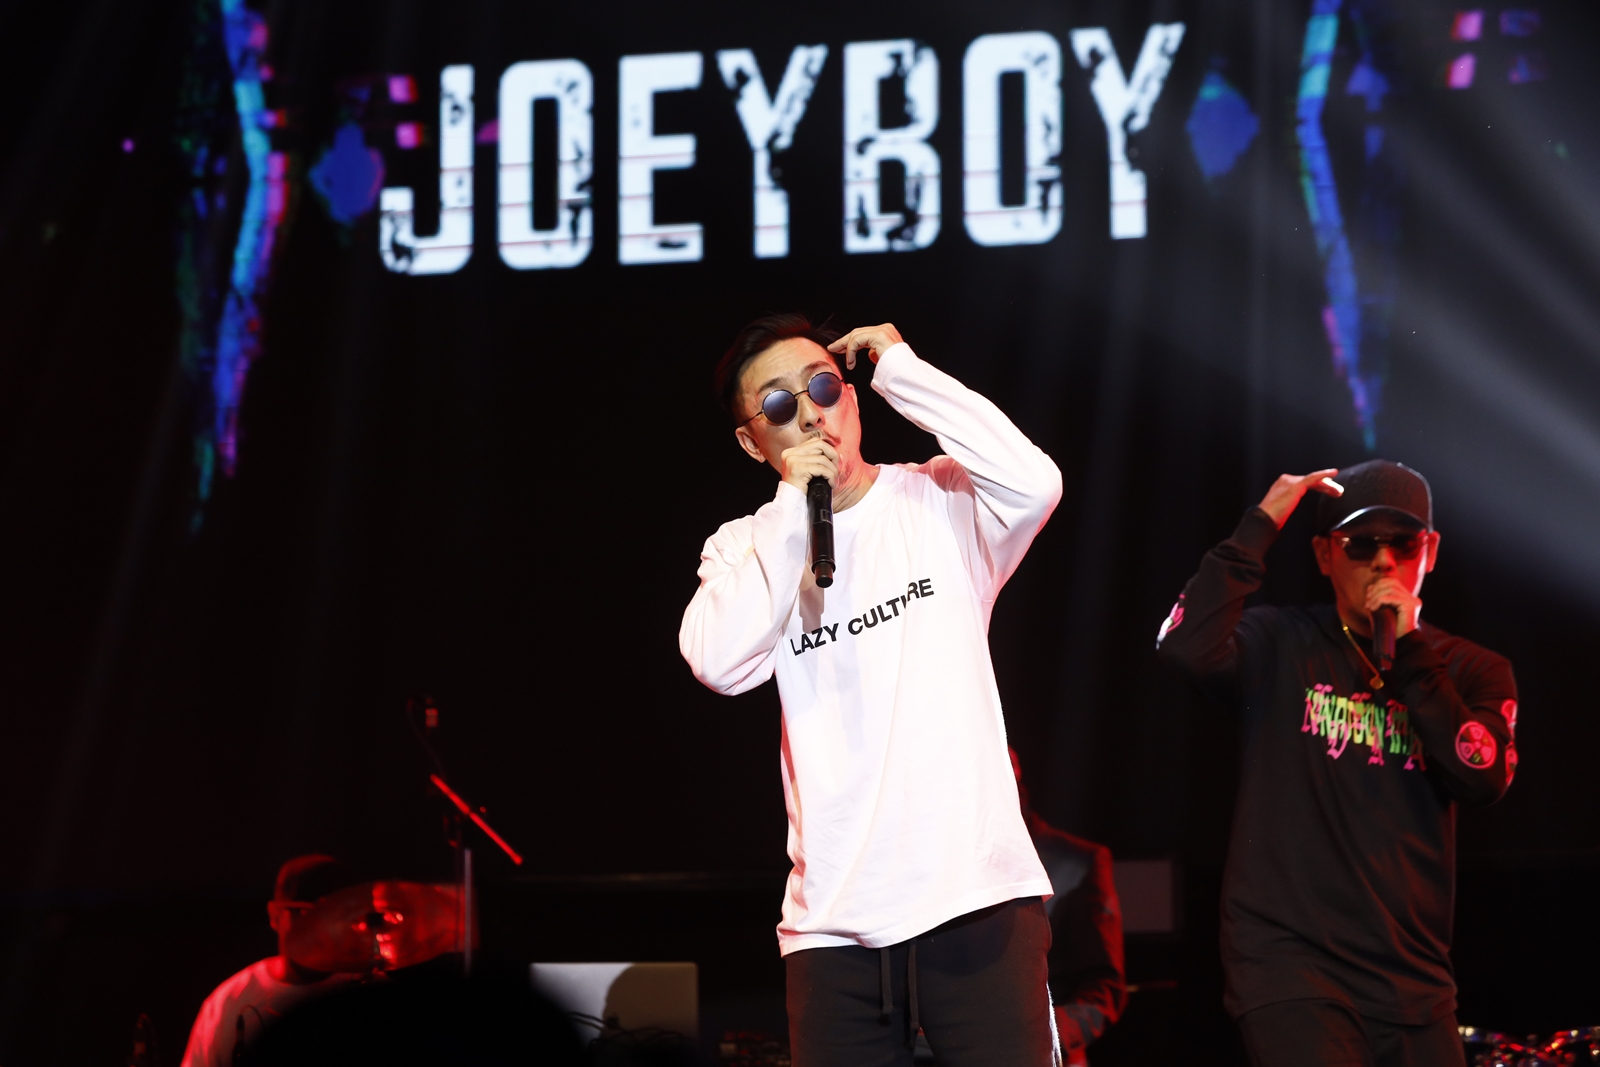 Joey Boy ควงคู่ UrboyTJ จัดหนัก GSB Duo Concert ให้ลุกเป็นไฟ!